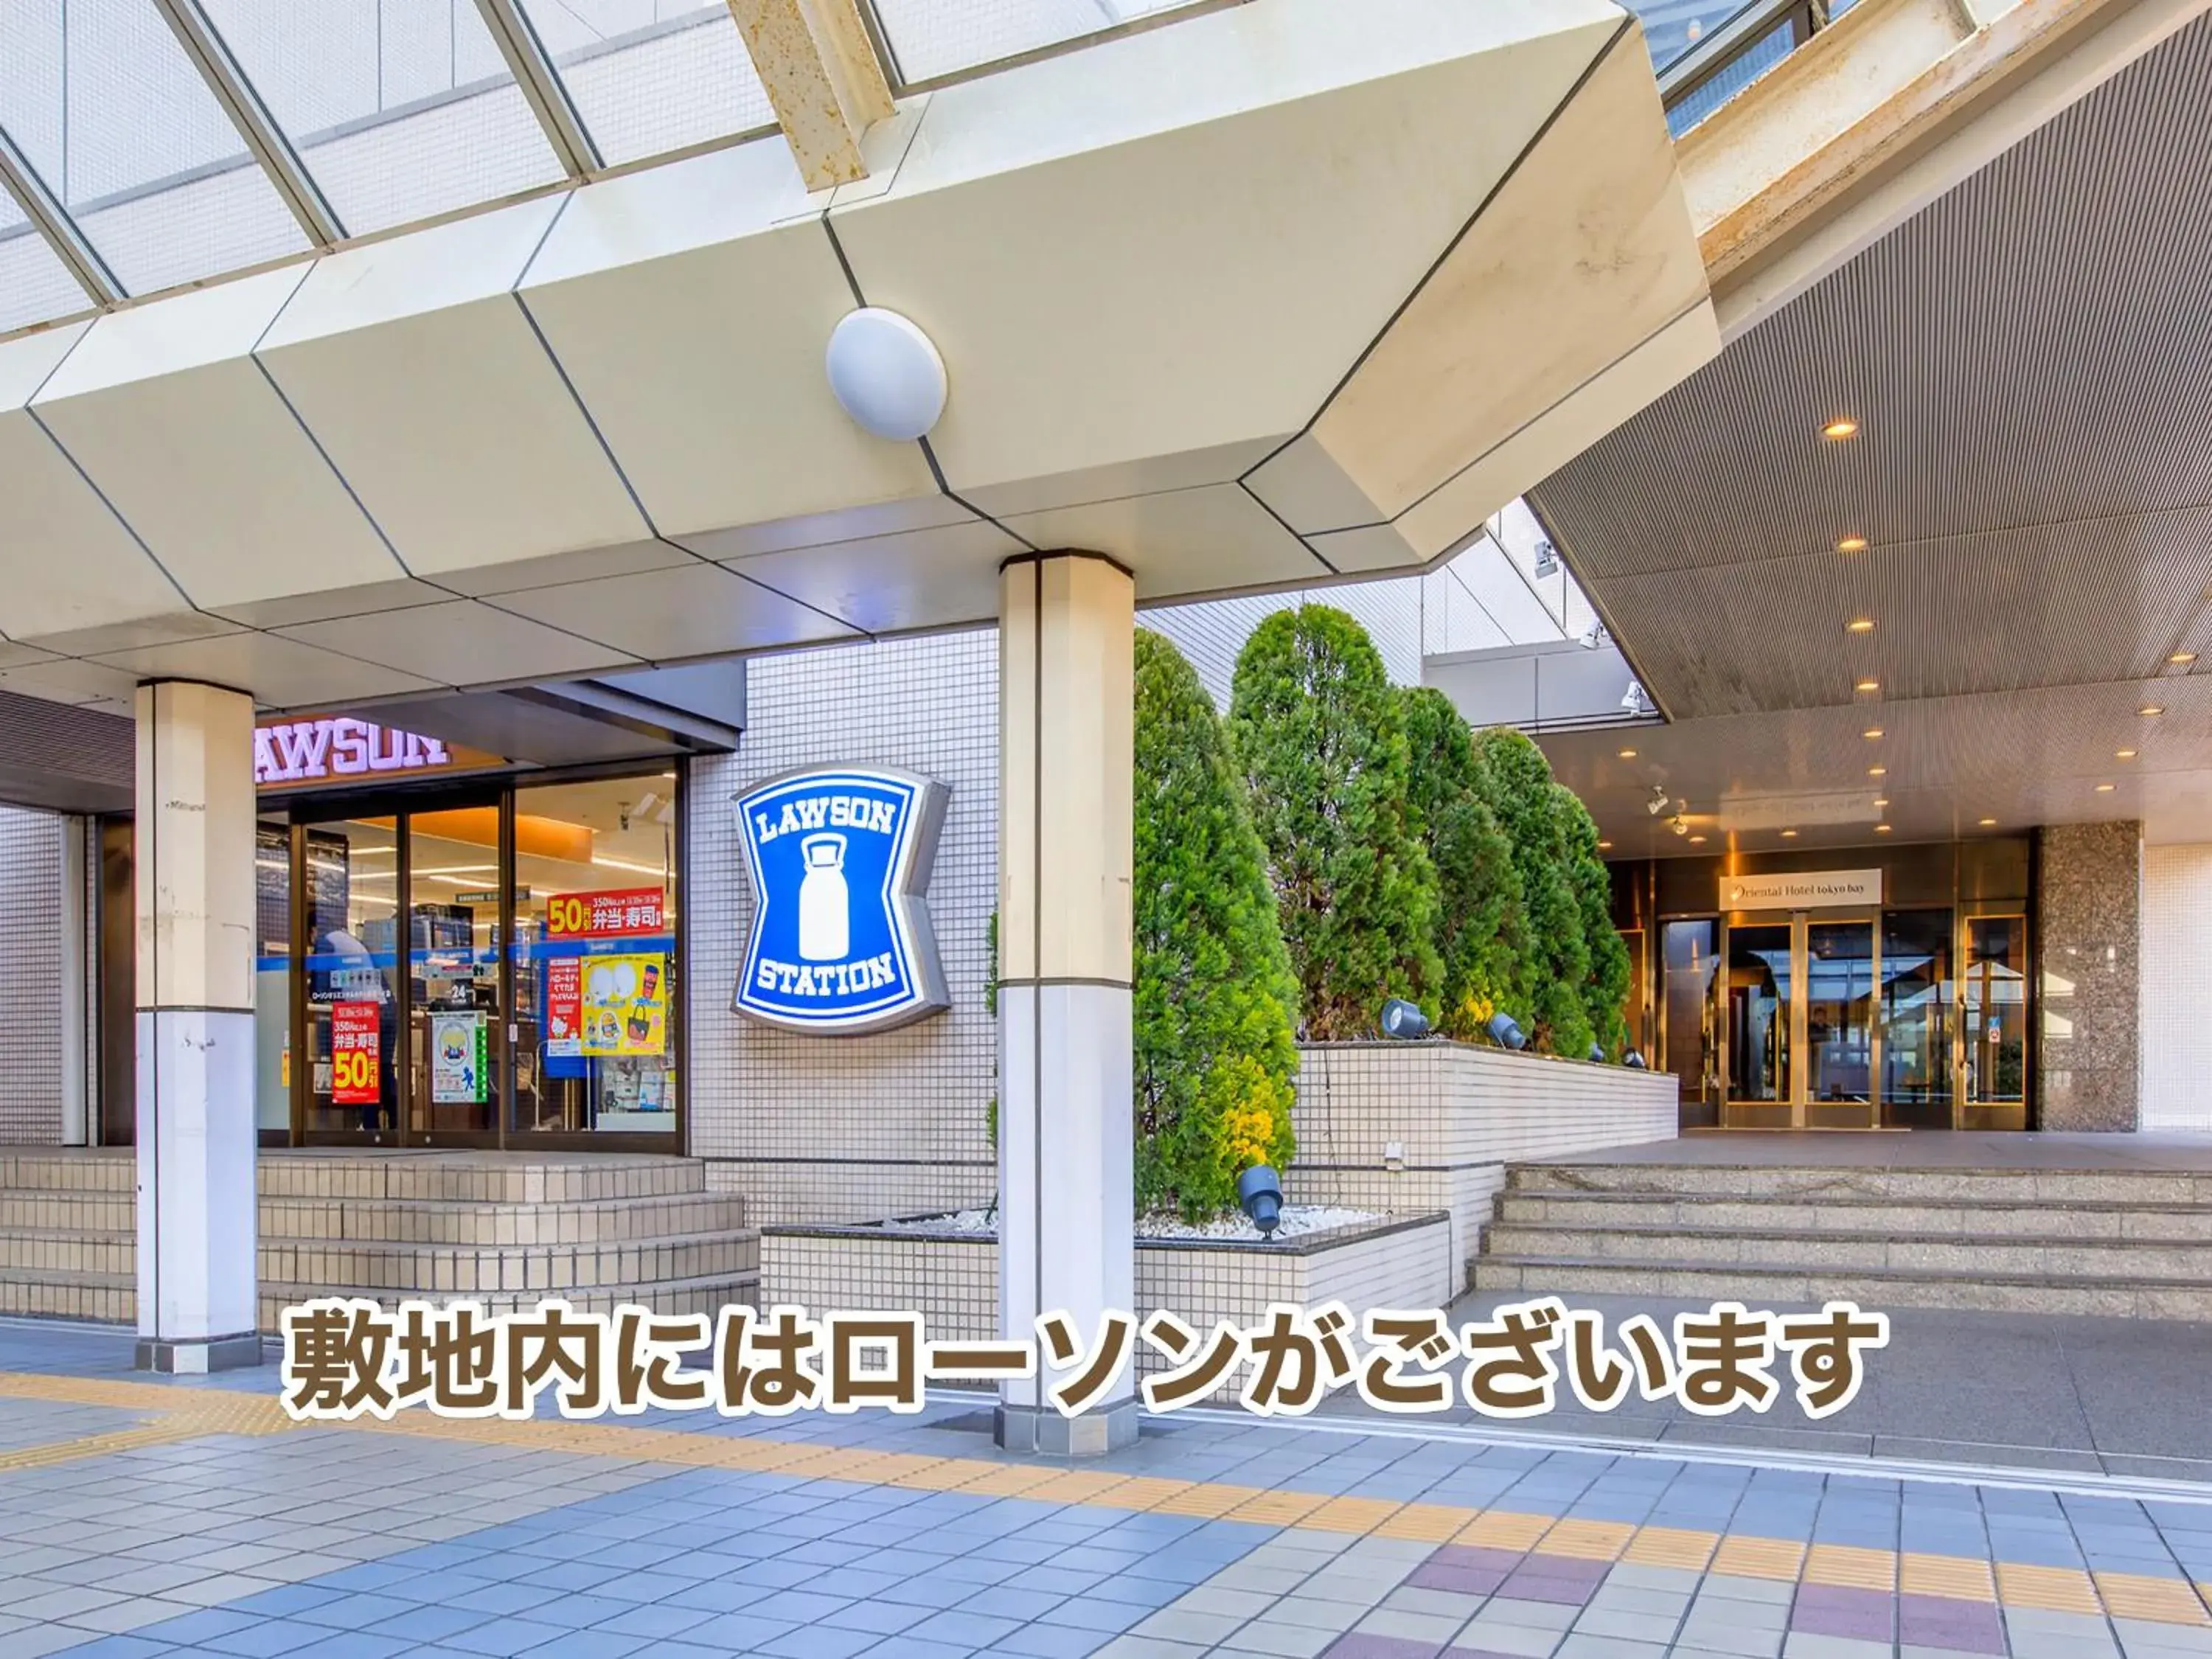 Area and facilities in Oriental Hotel Tokyo Bay